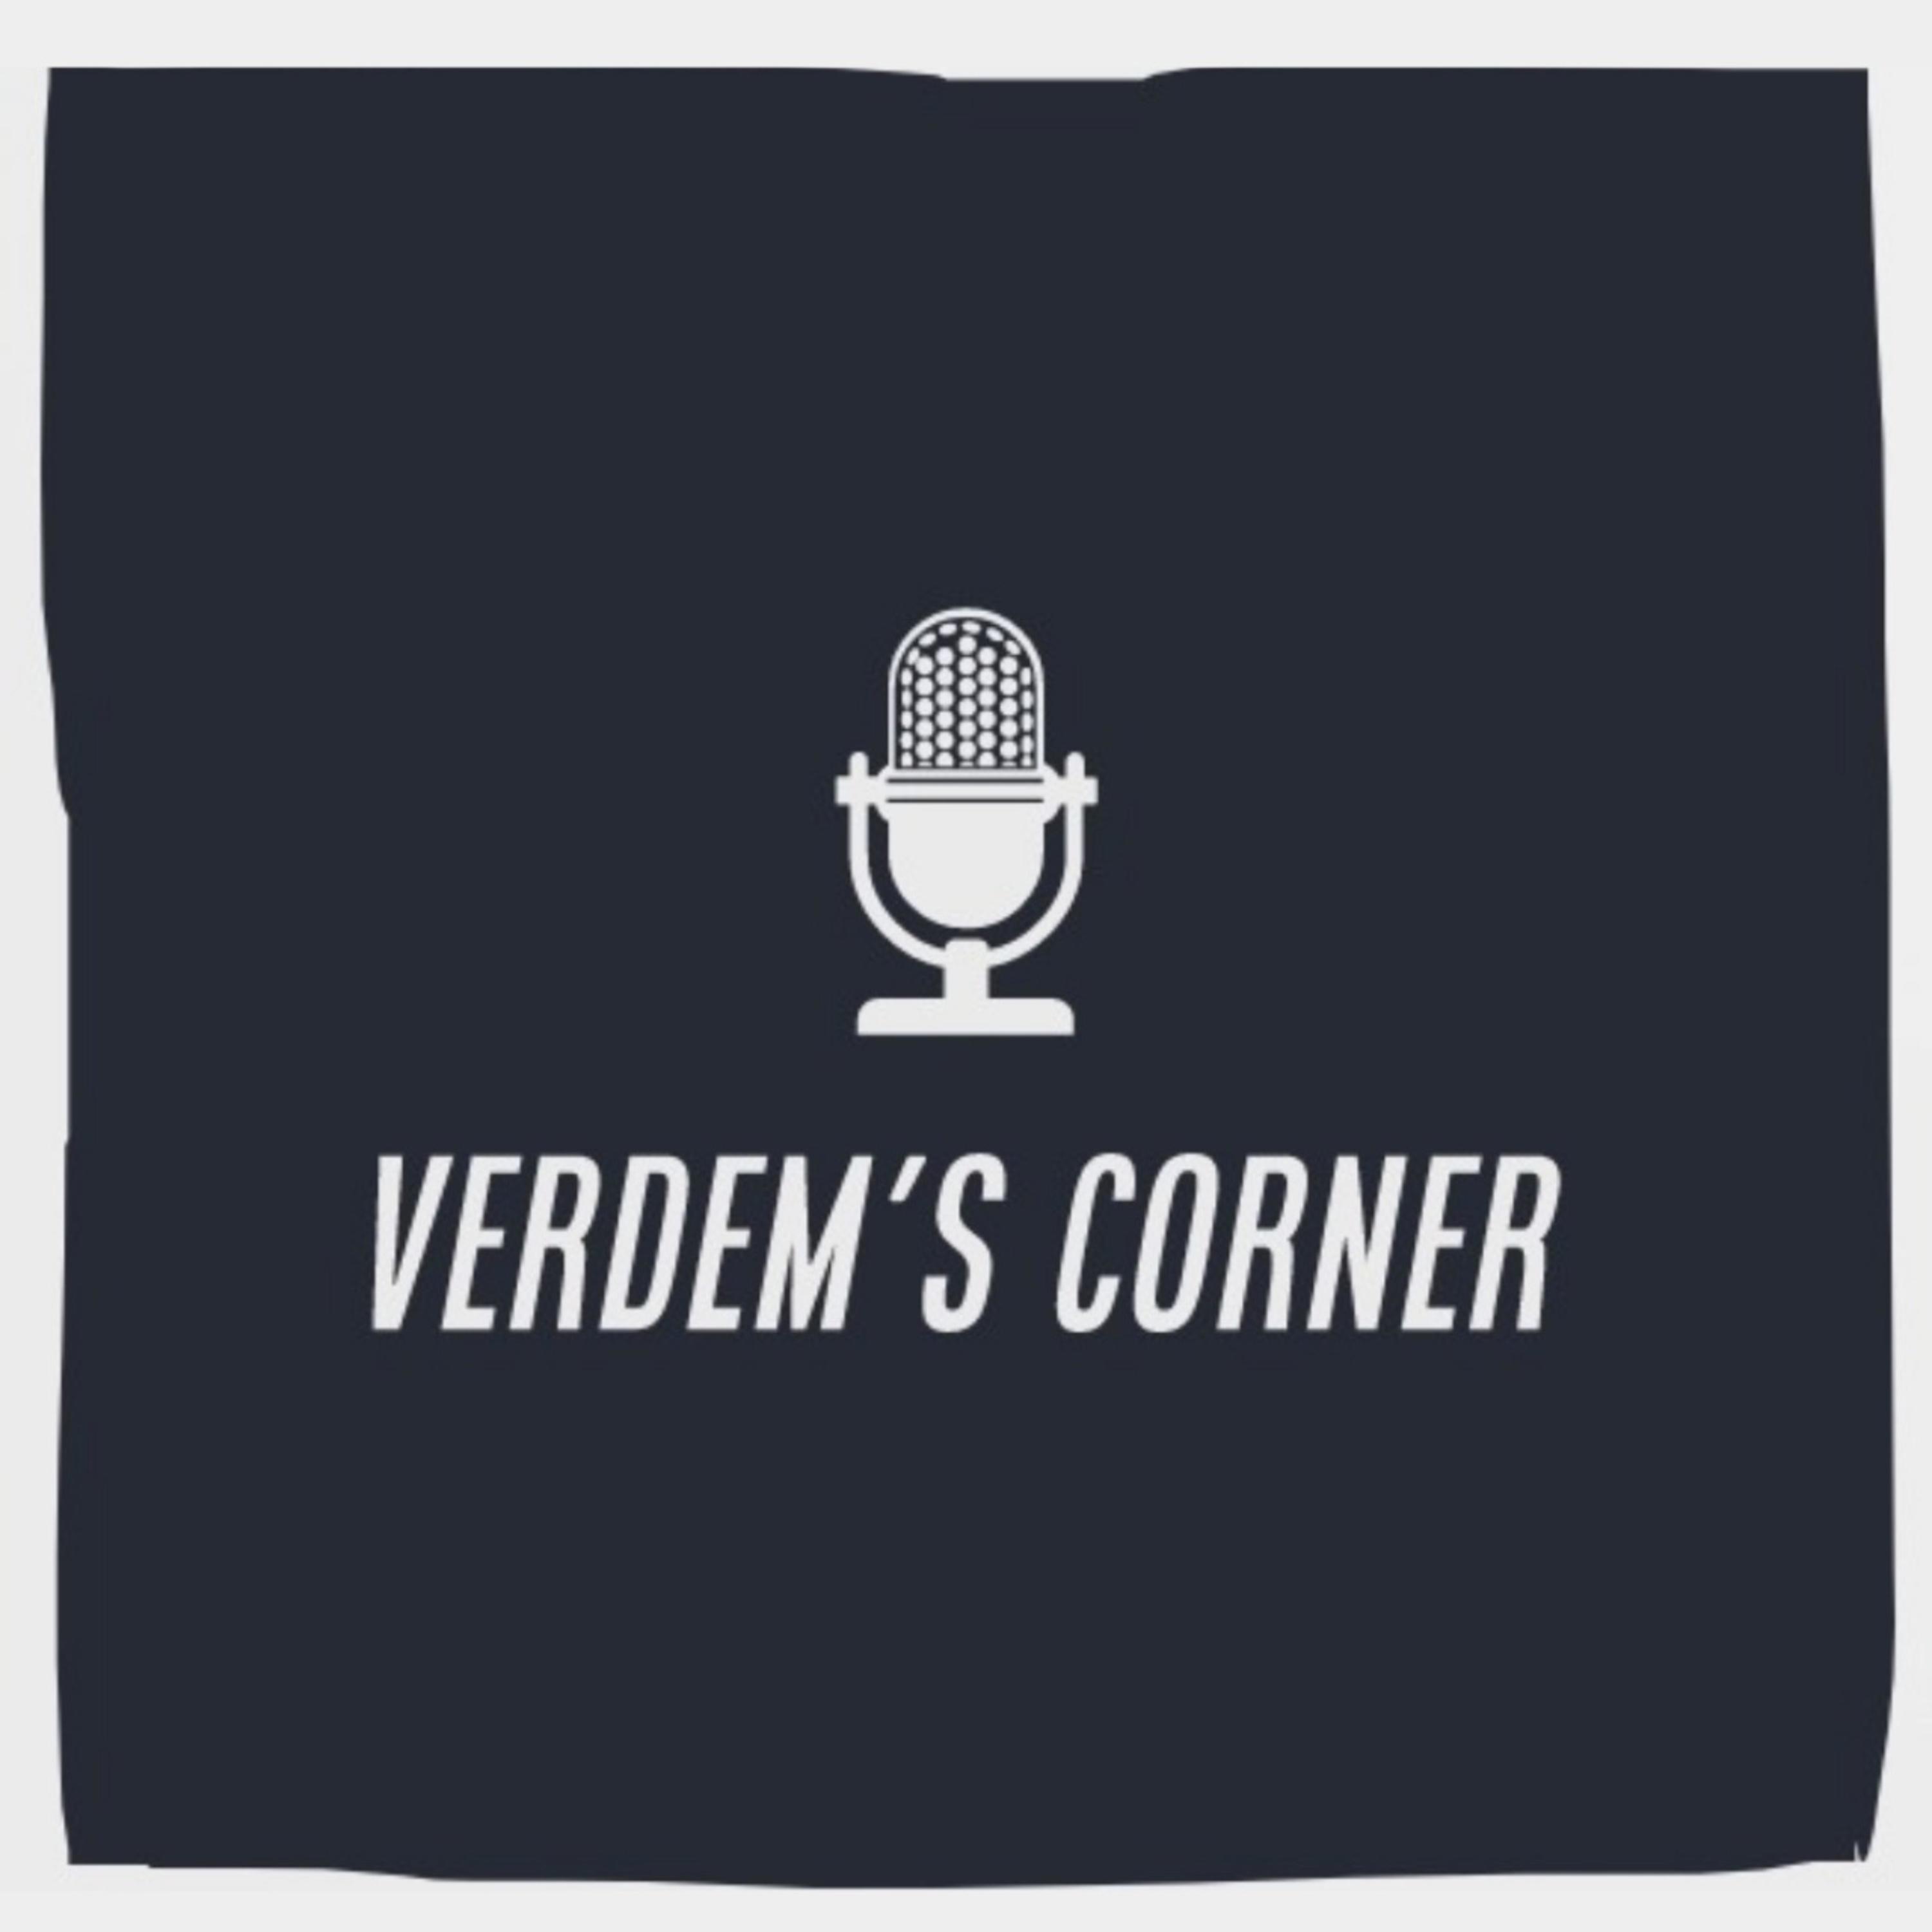 Verdem's Corner